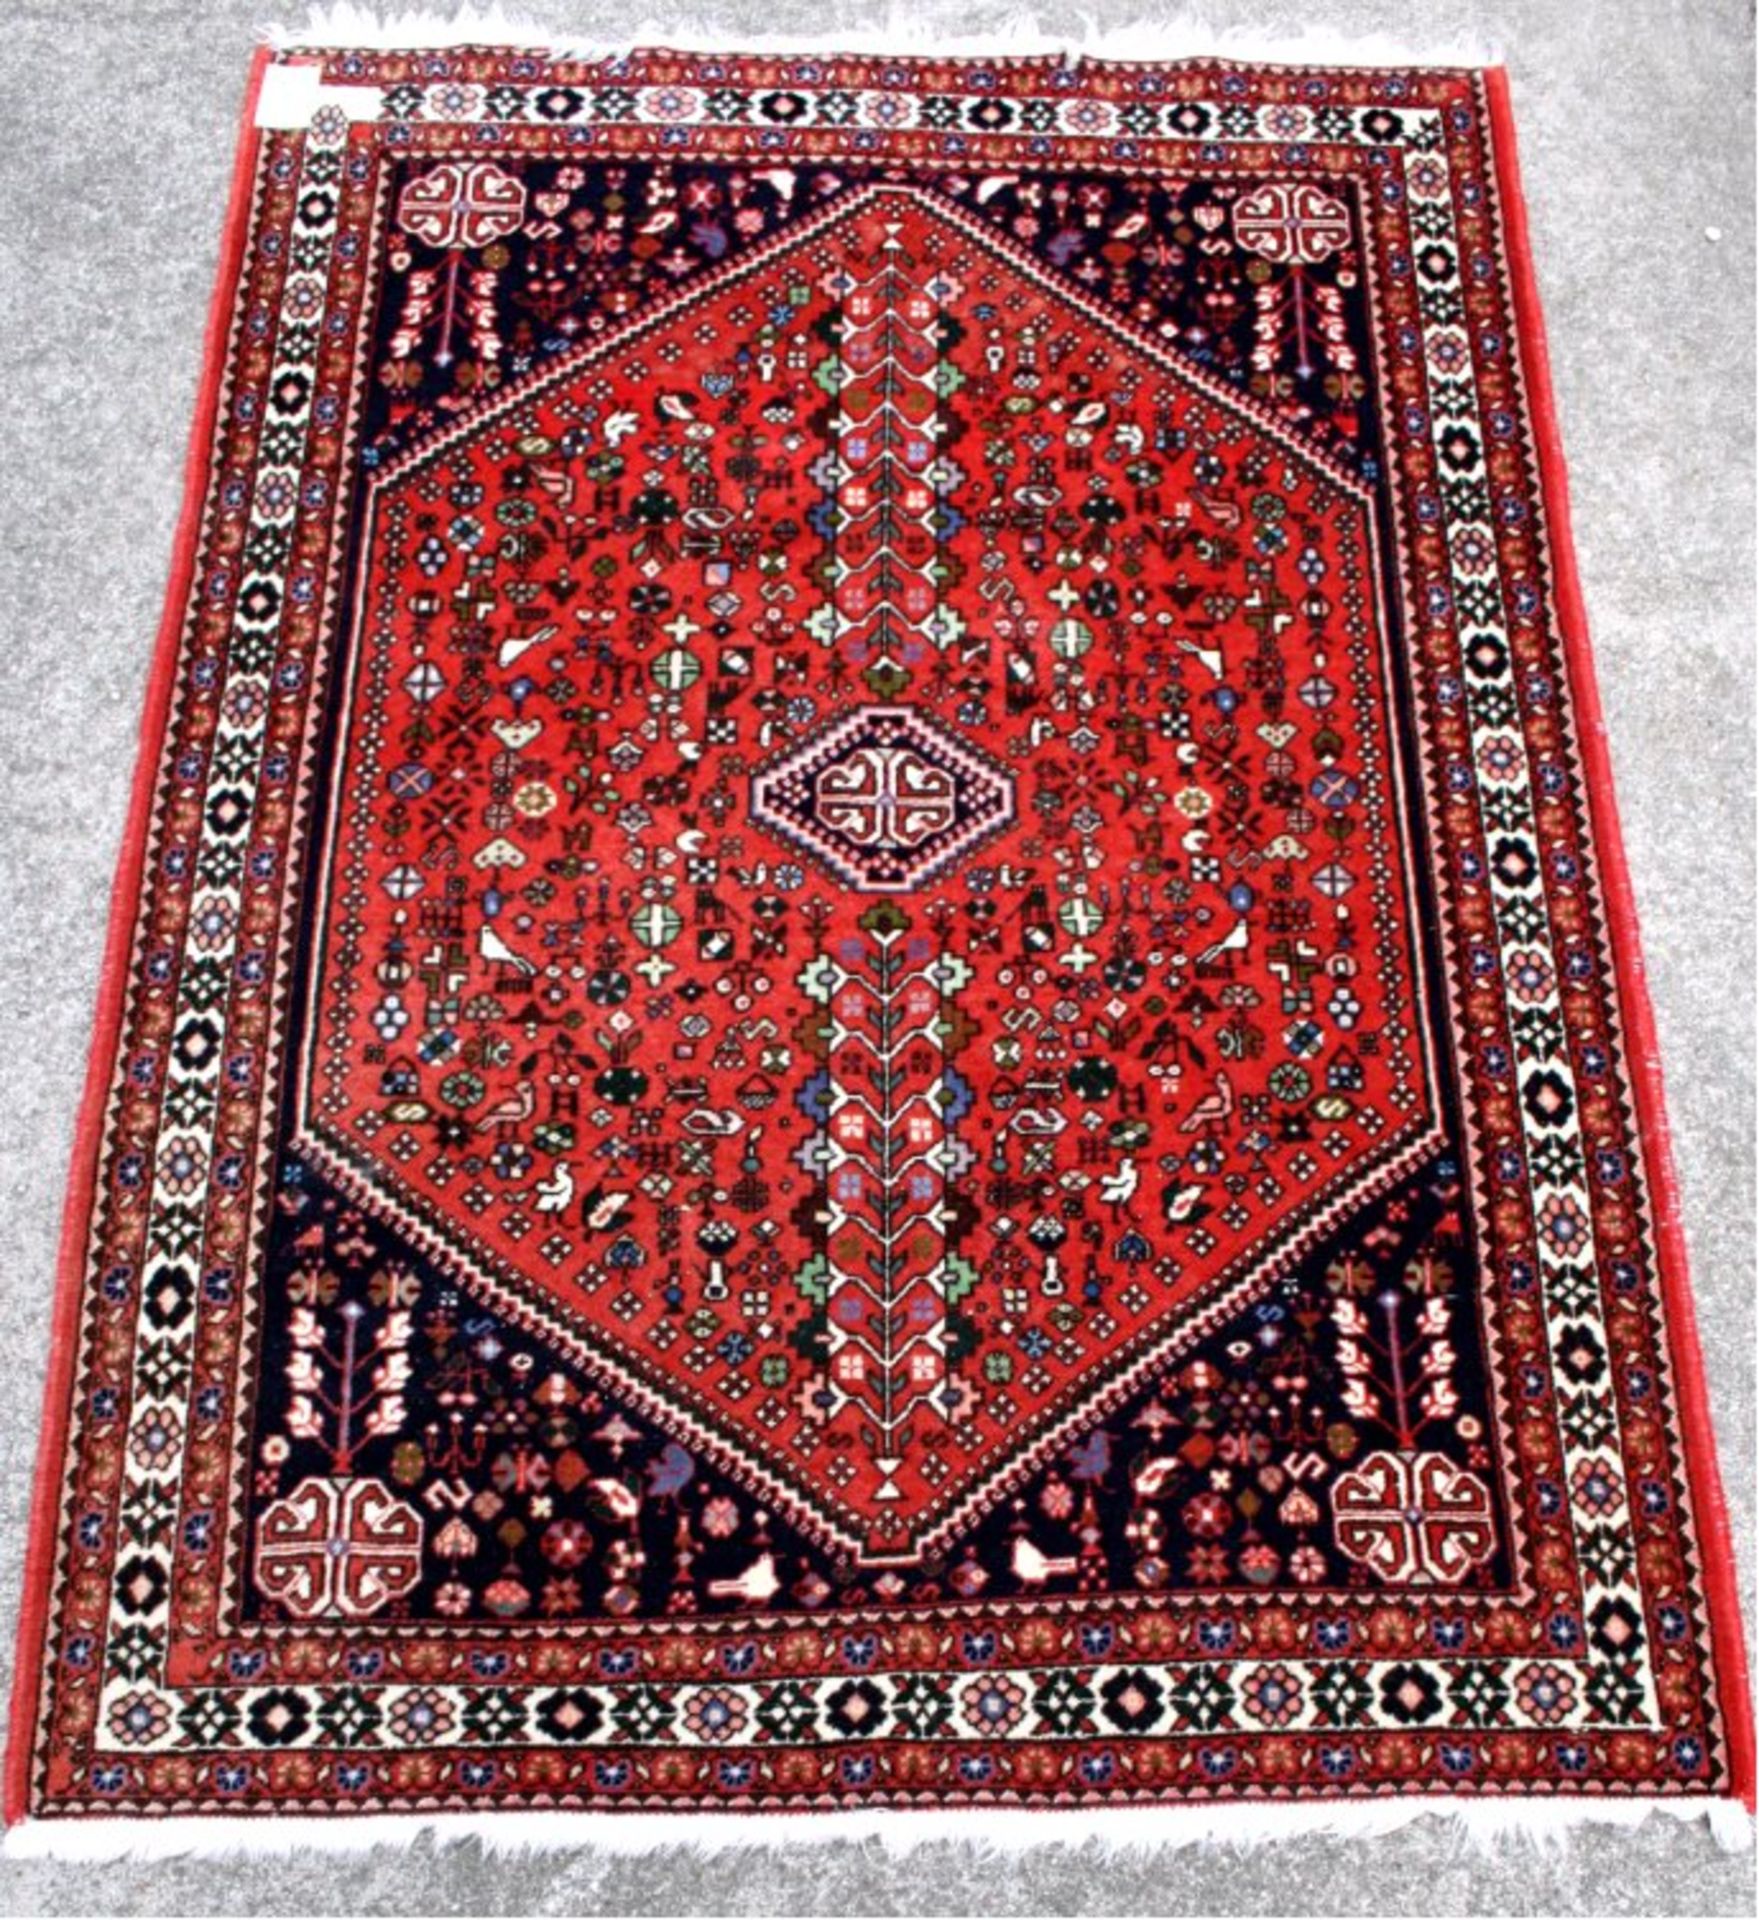 Iran, Teppichgeometrisches Muster, rotgrundig, ca. 155x111 cm